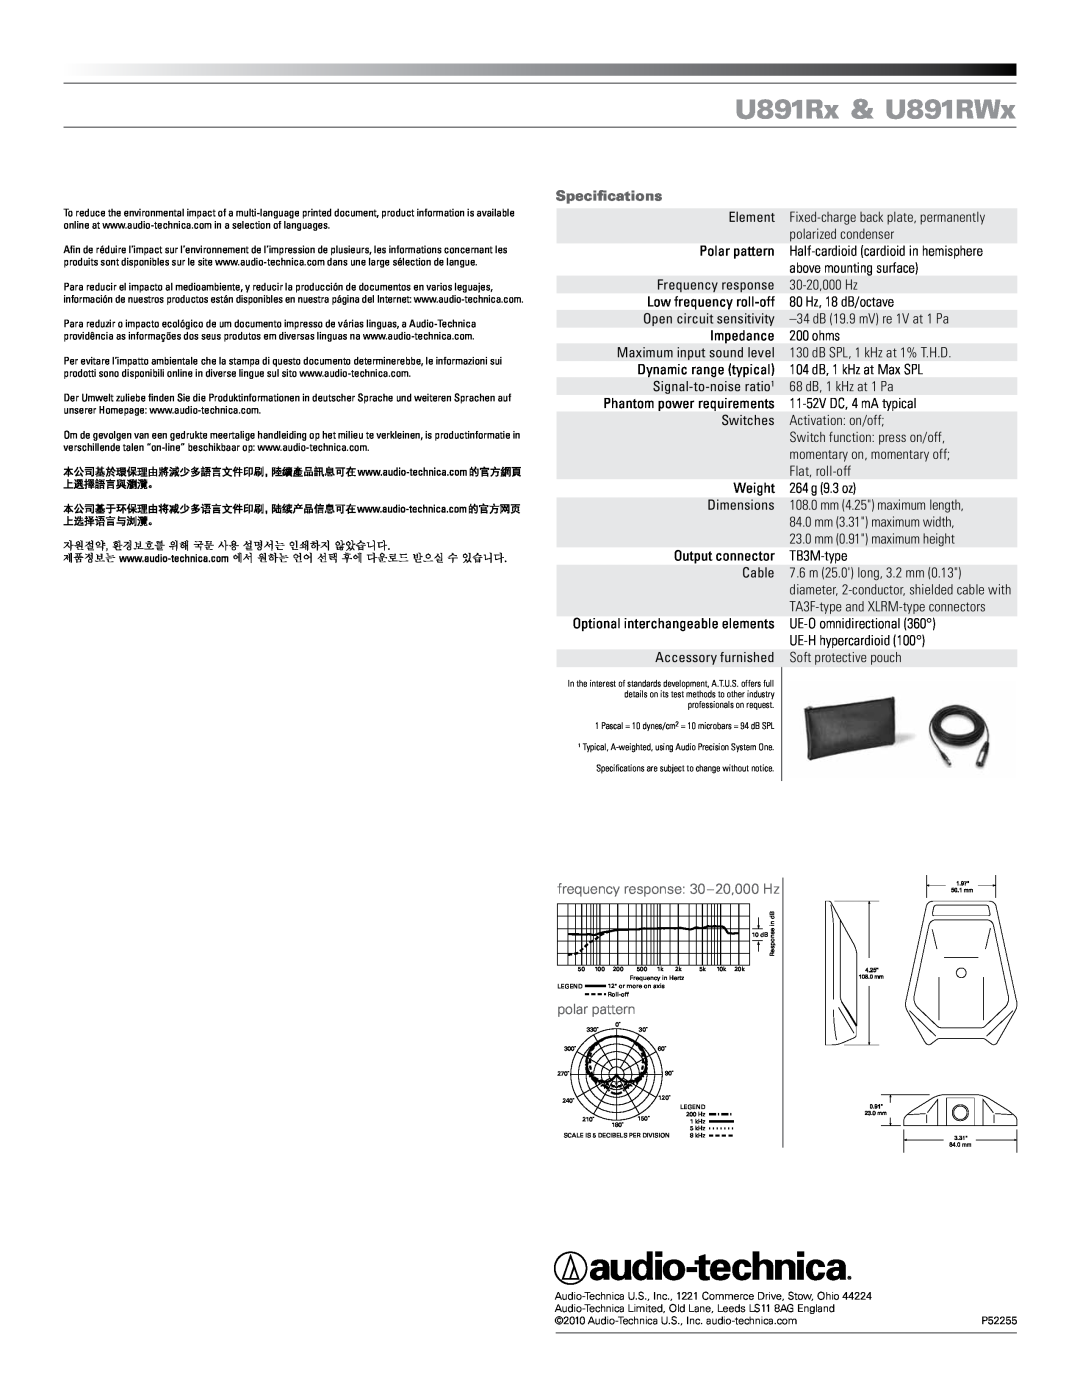 Audio-Technica U891Rx & U891RWx manual Specifications, frequency response 30-20,000 Hz, polar pattern 